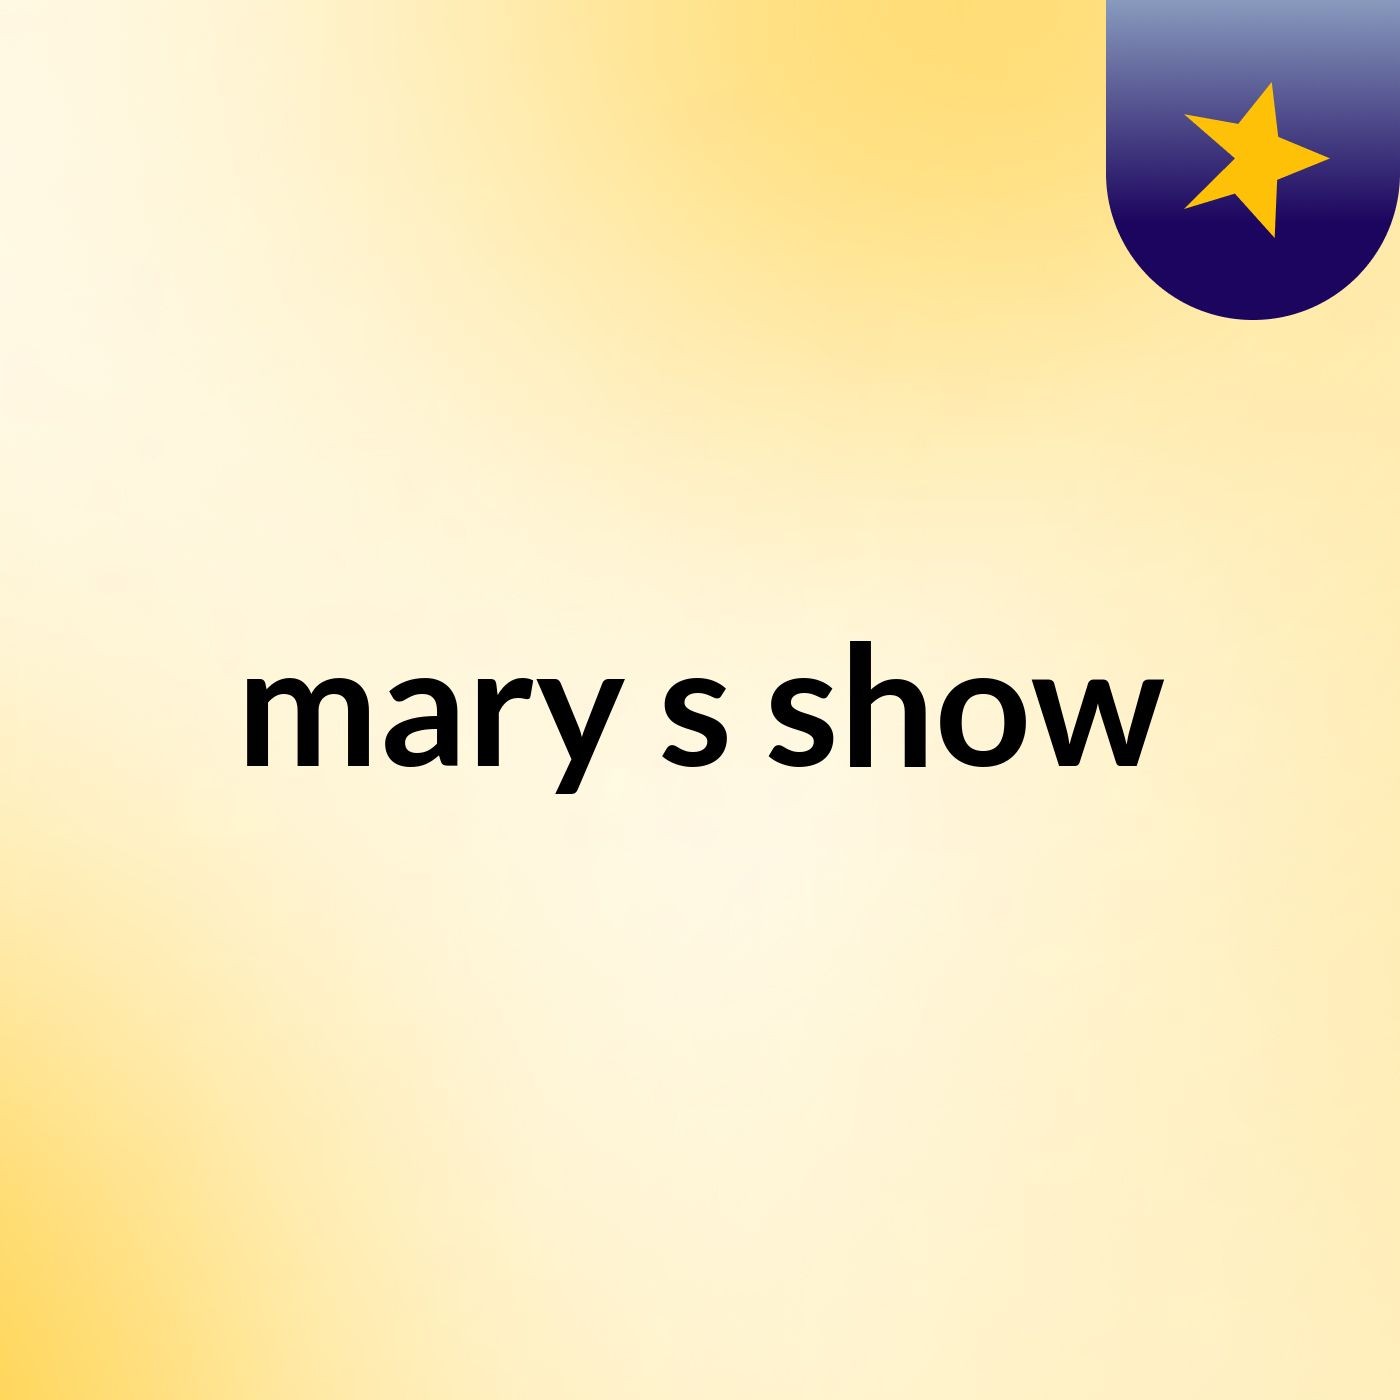 mary's show